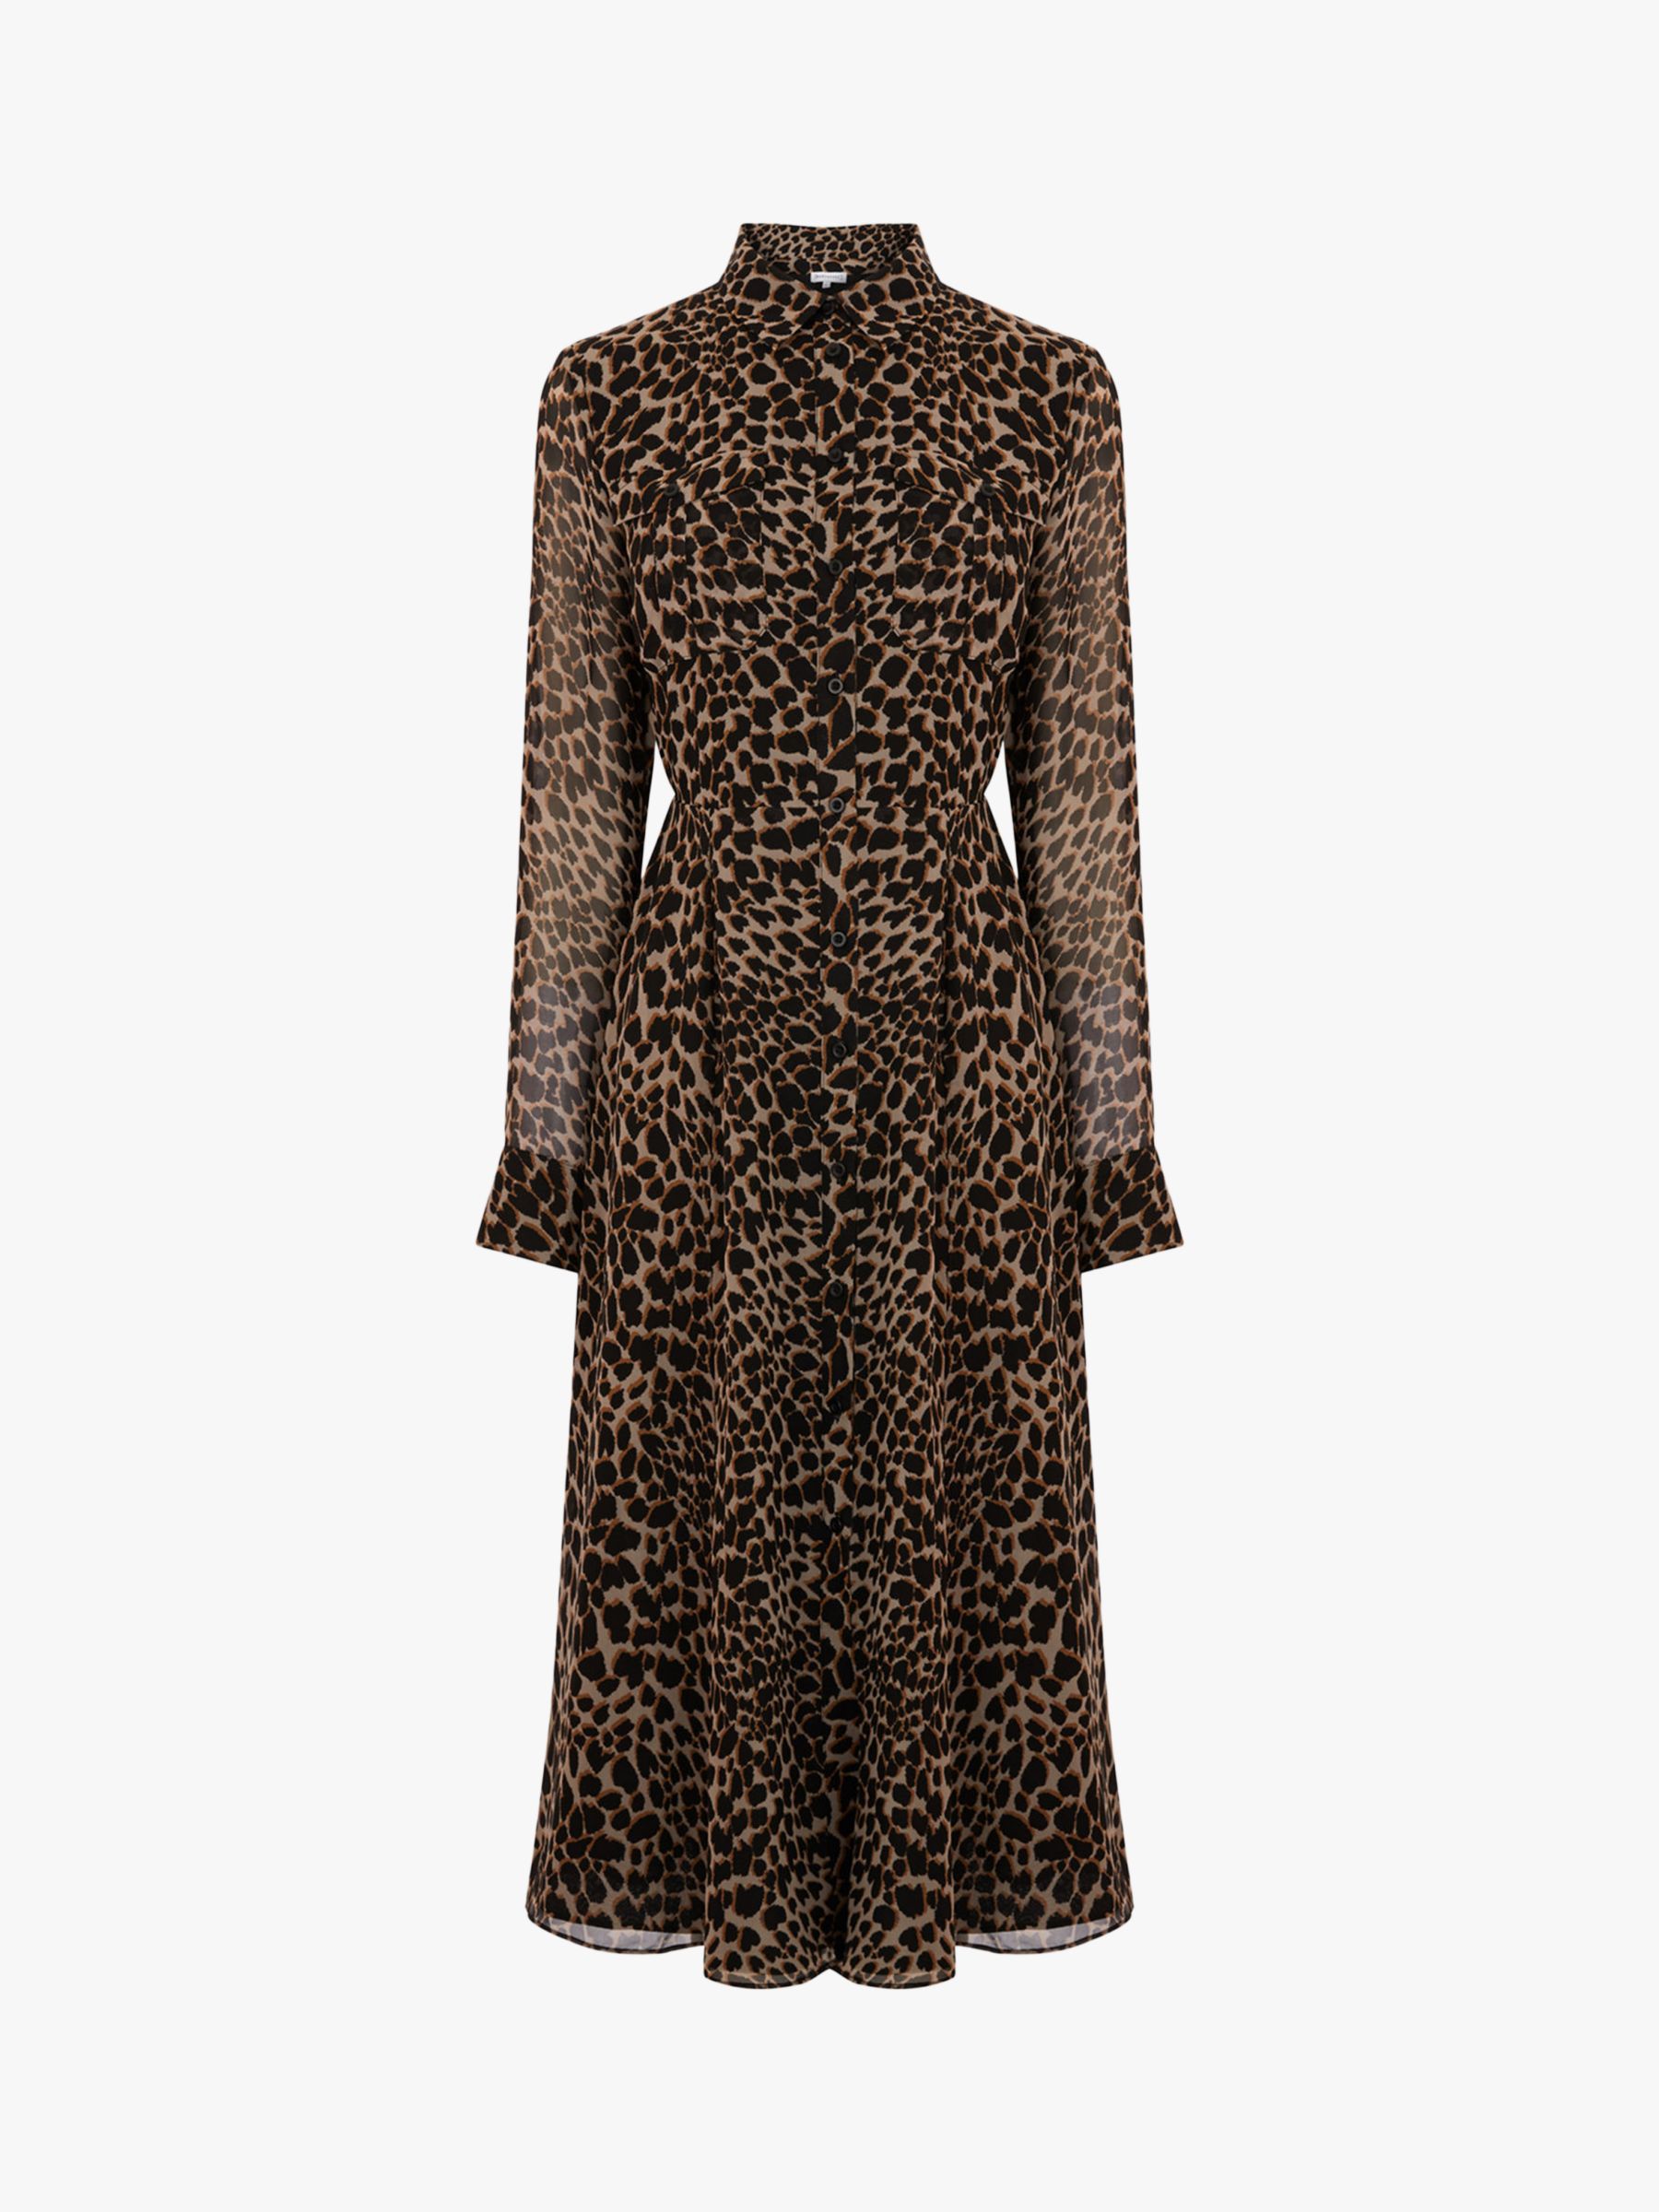 warehouse leopard dress